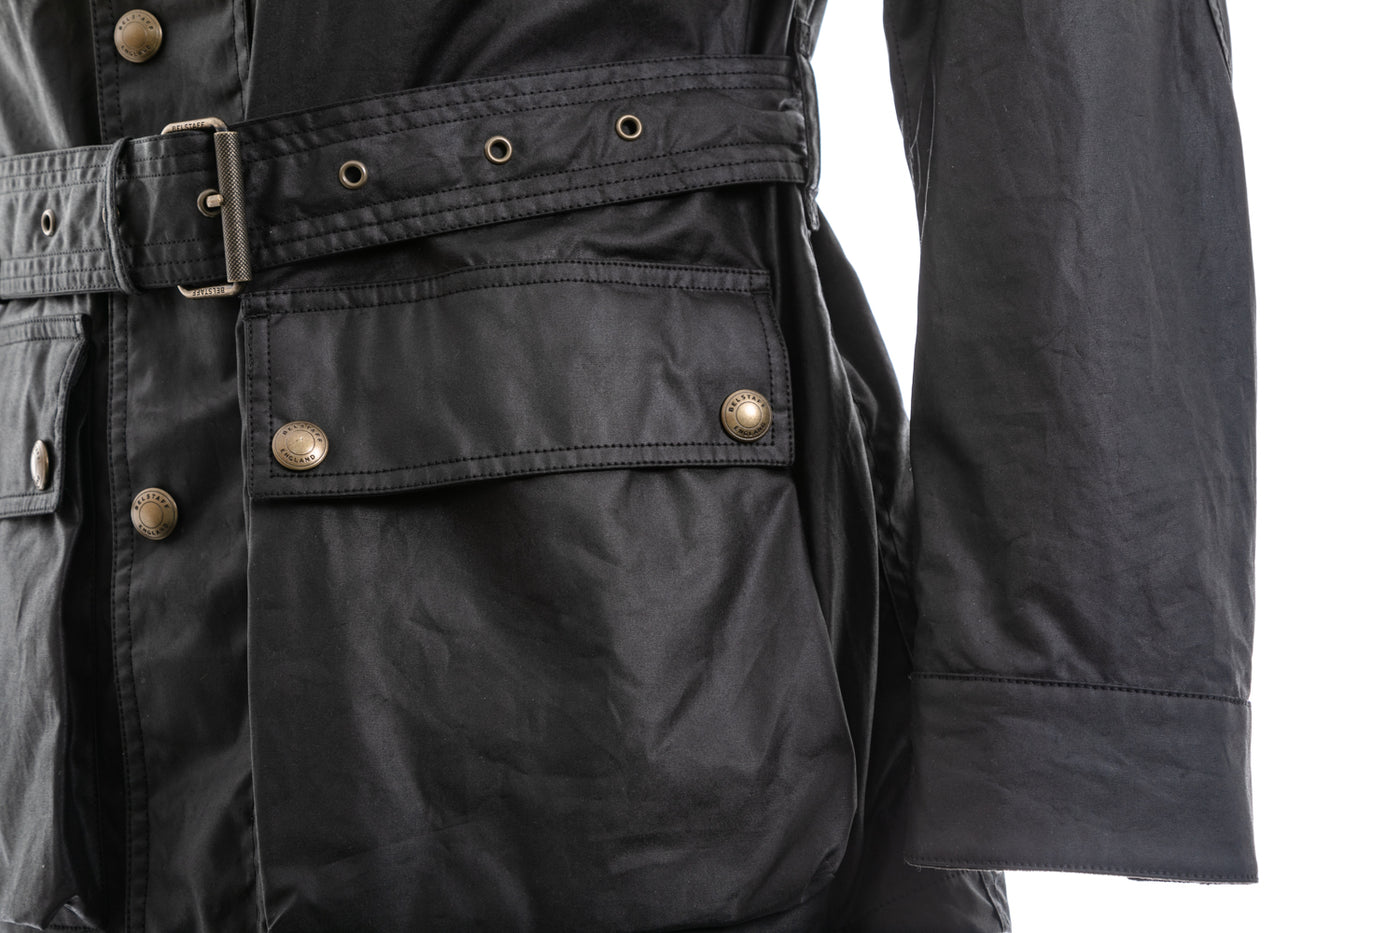 Belstaff Trialmaster Jacket in Black Pocket